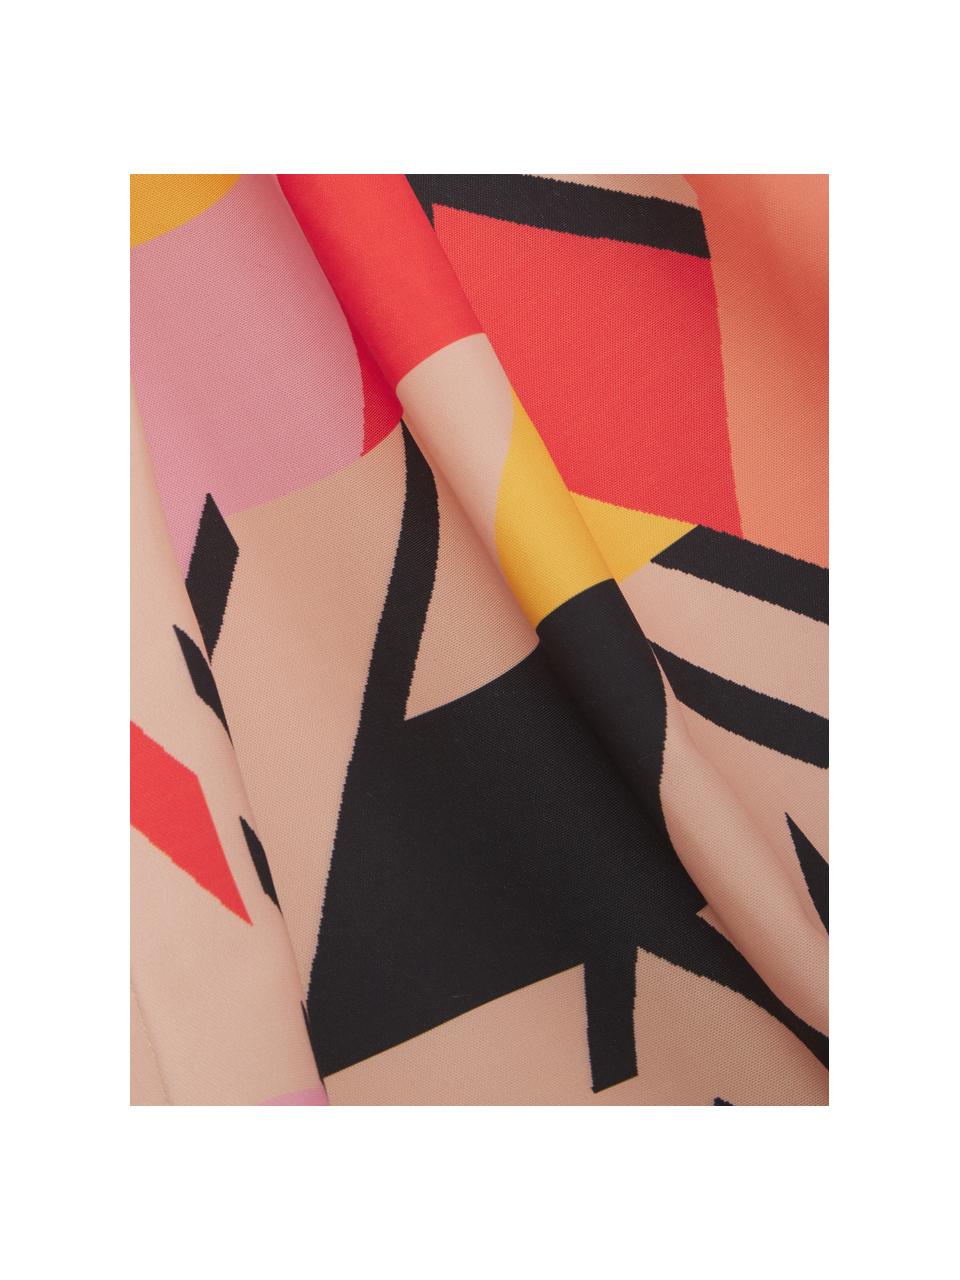 Hamac ethnique Arti, Polyester, Rose, orange, rouge, noir, larg. 80 x long. 180 cm